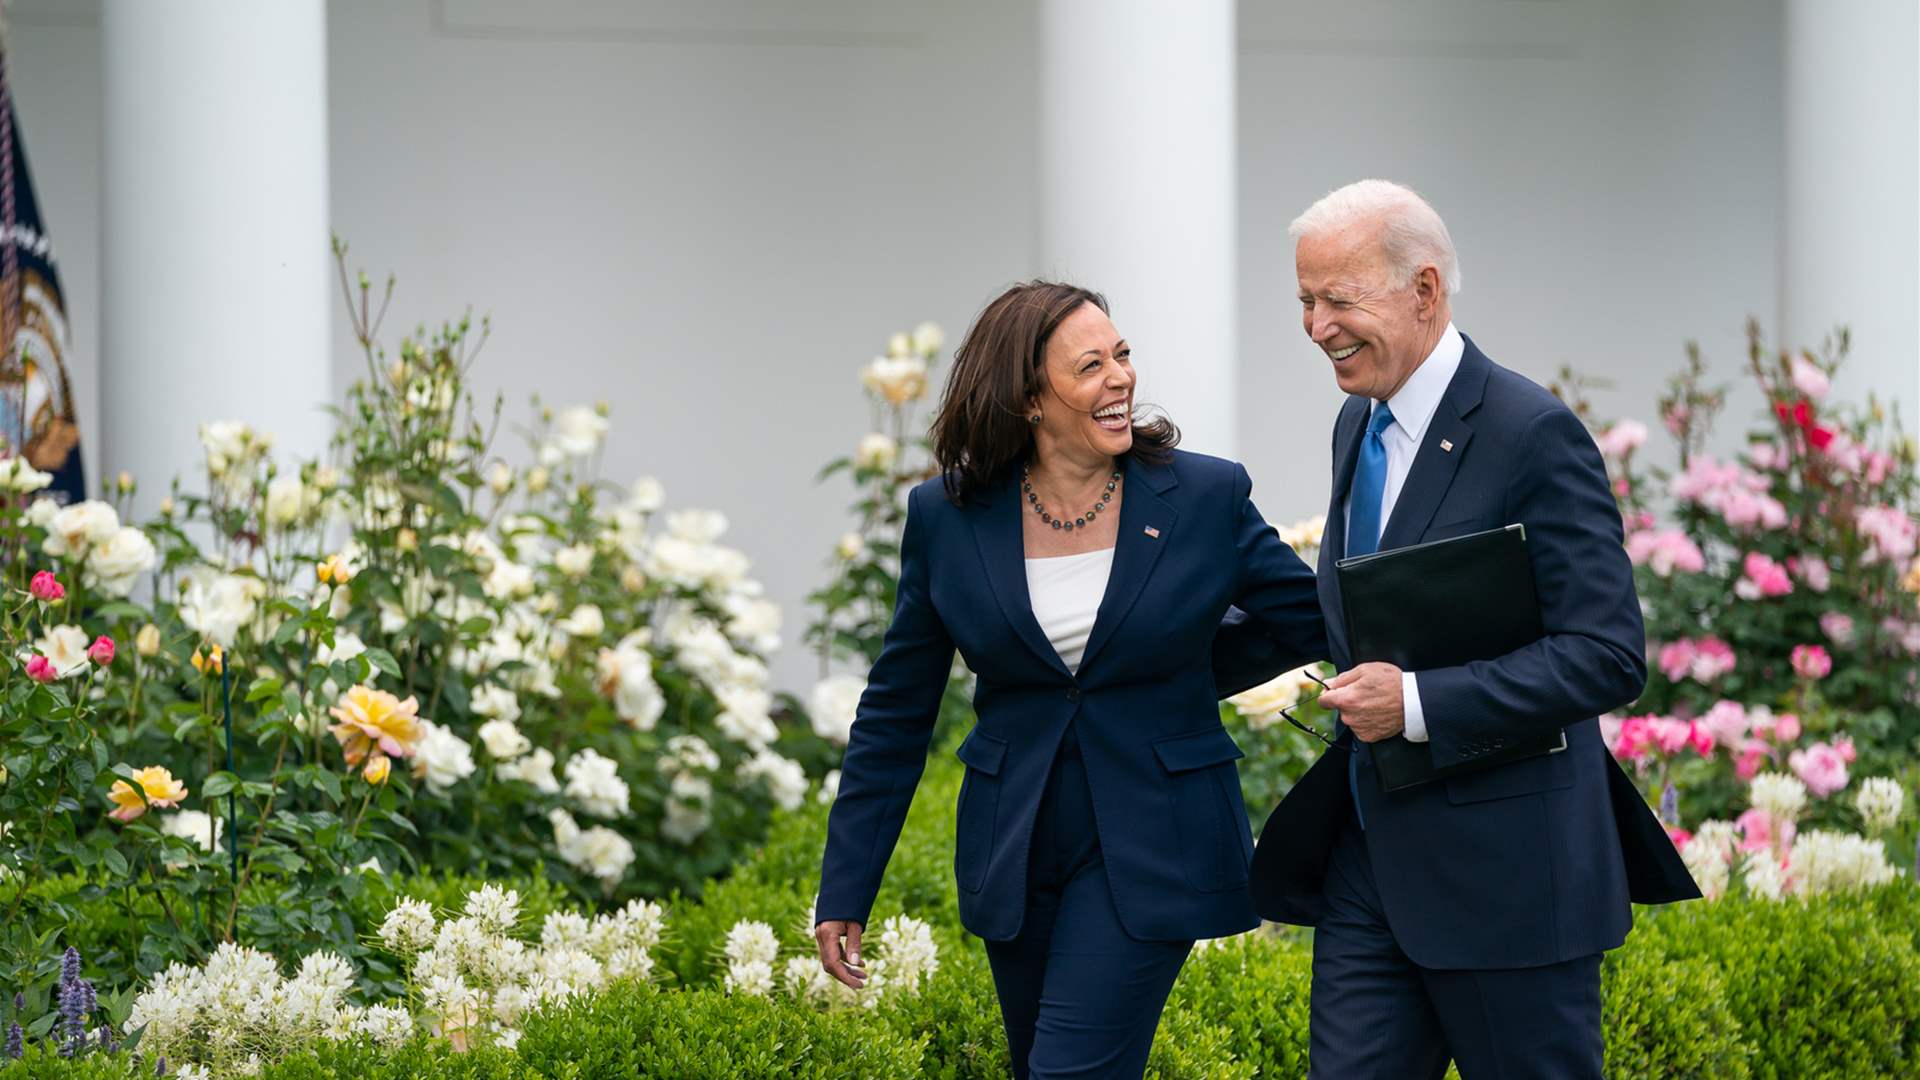 US President Biden Endorses VP Kamala Harris for 2024 Election